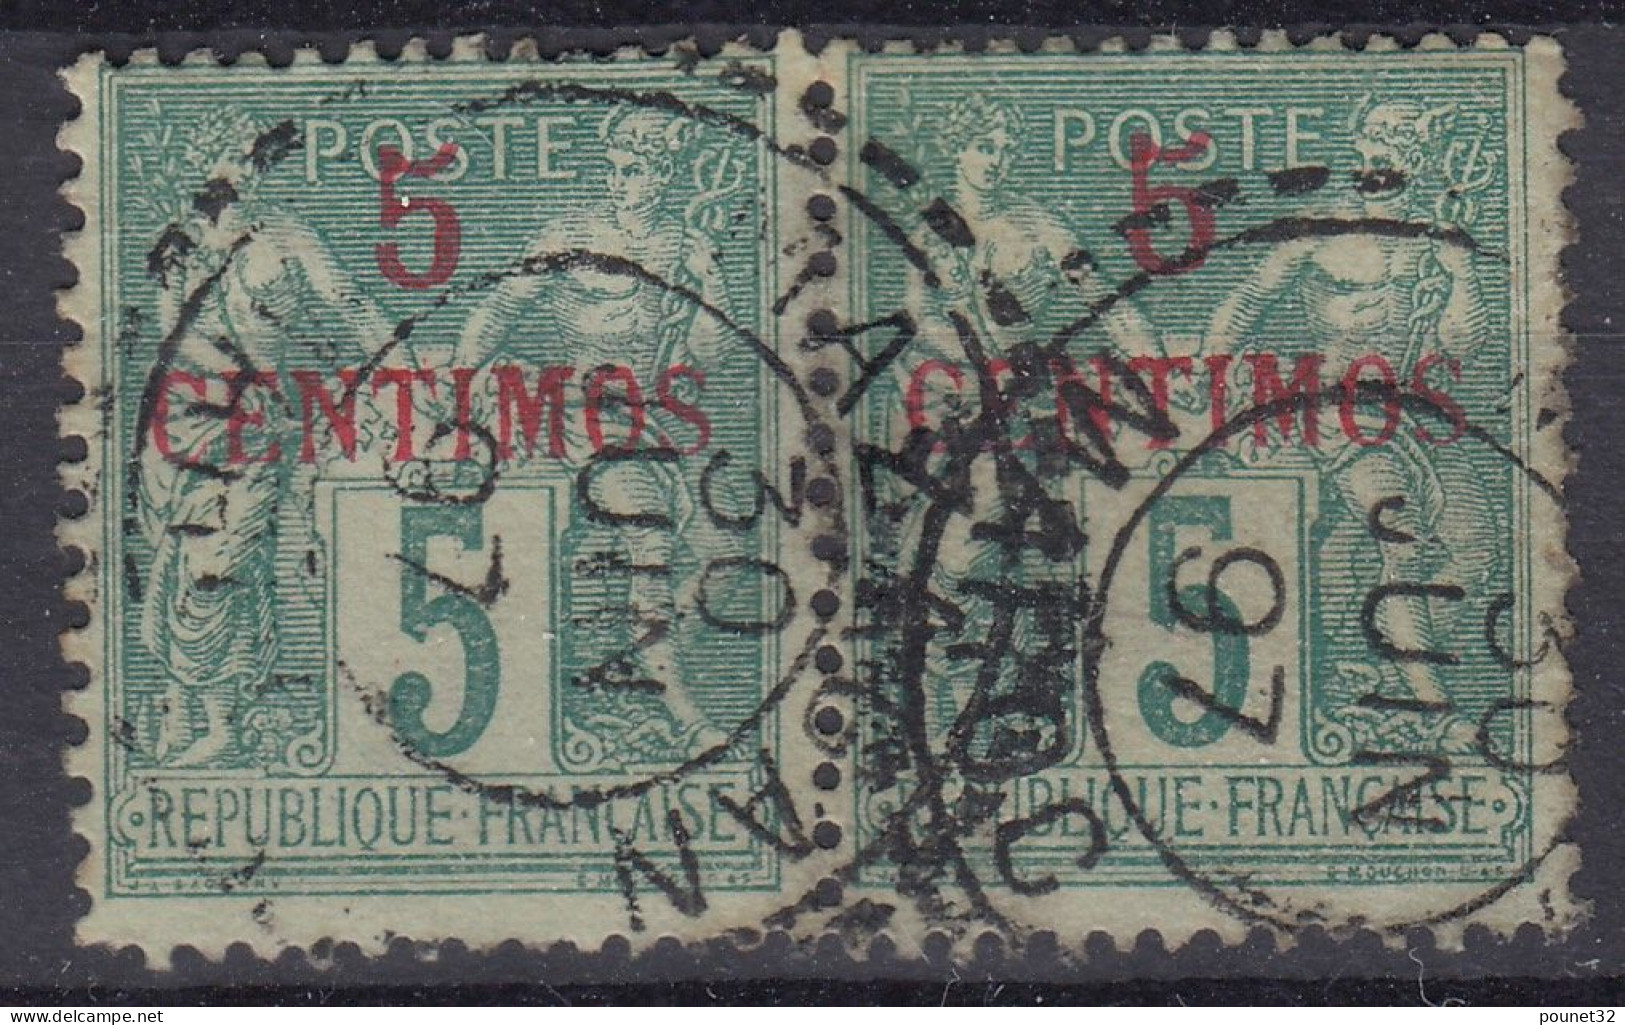 TIMBRE MAROC TYPE SAGE 5 CENTIMOS N° 1 EN PAIRE CACHET MAZAGAN DU 30 JUIN 97 - Used Stamps